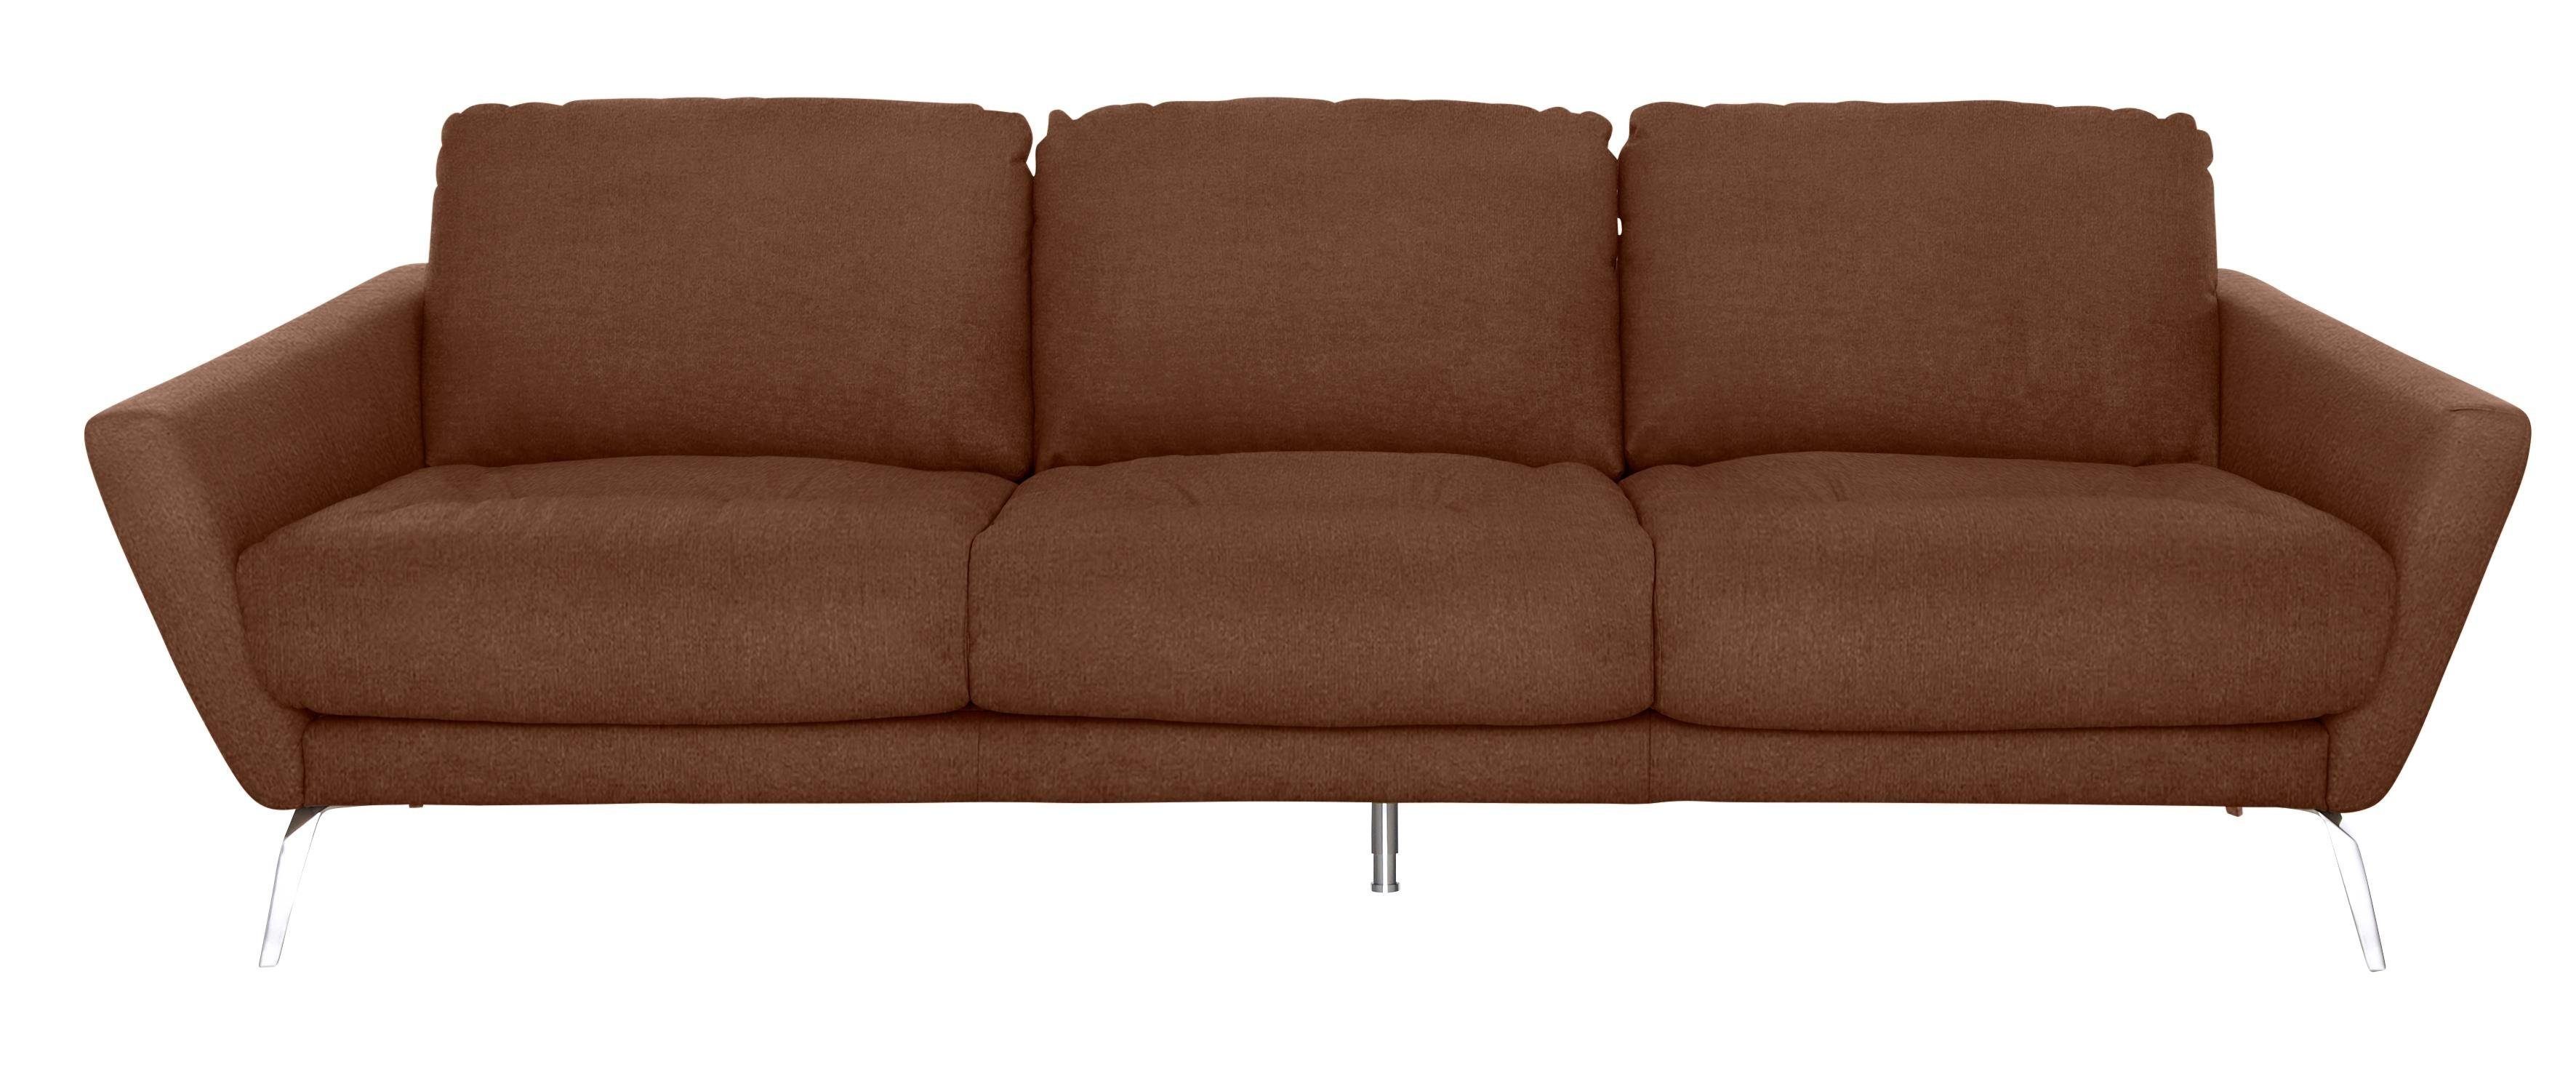 Big-Sofa dekorativer W.SCHILLIG softy, im Chrom Heftung glänzend Füße Sitz, mit